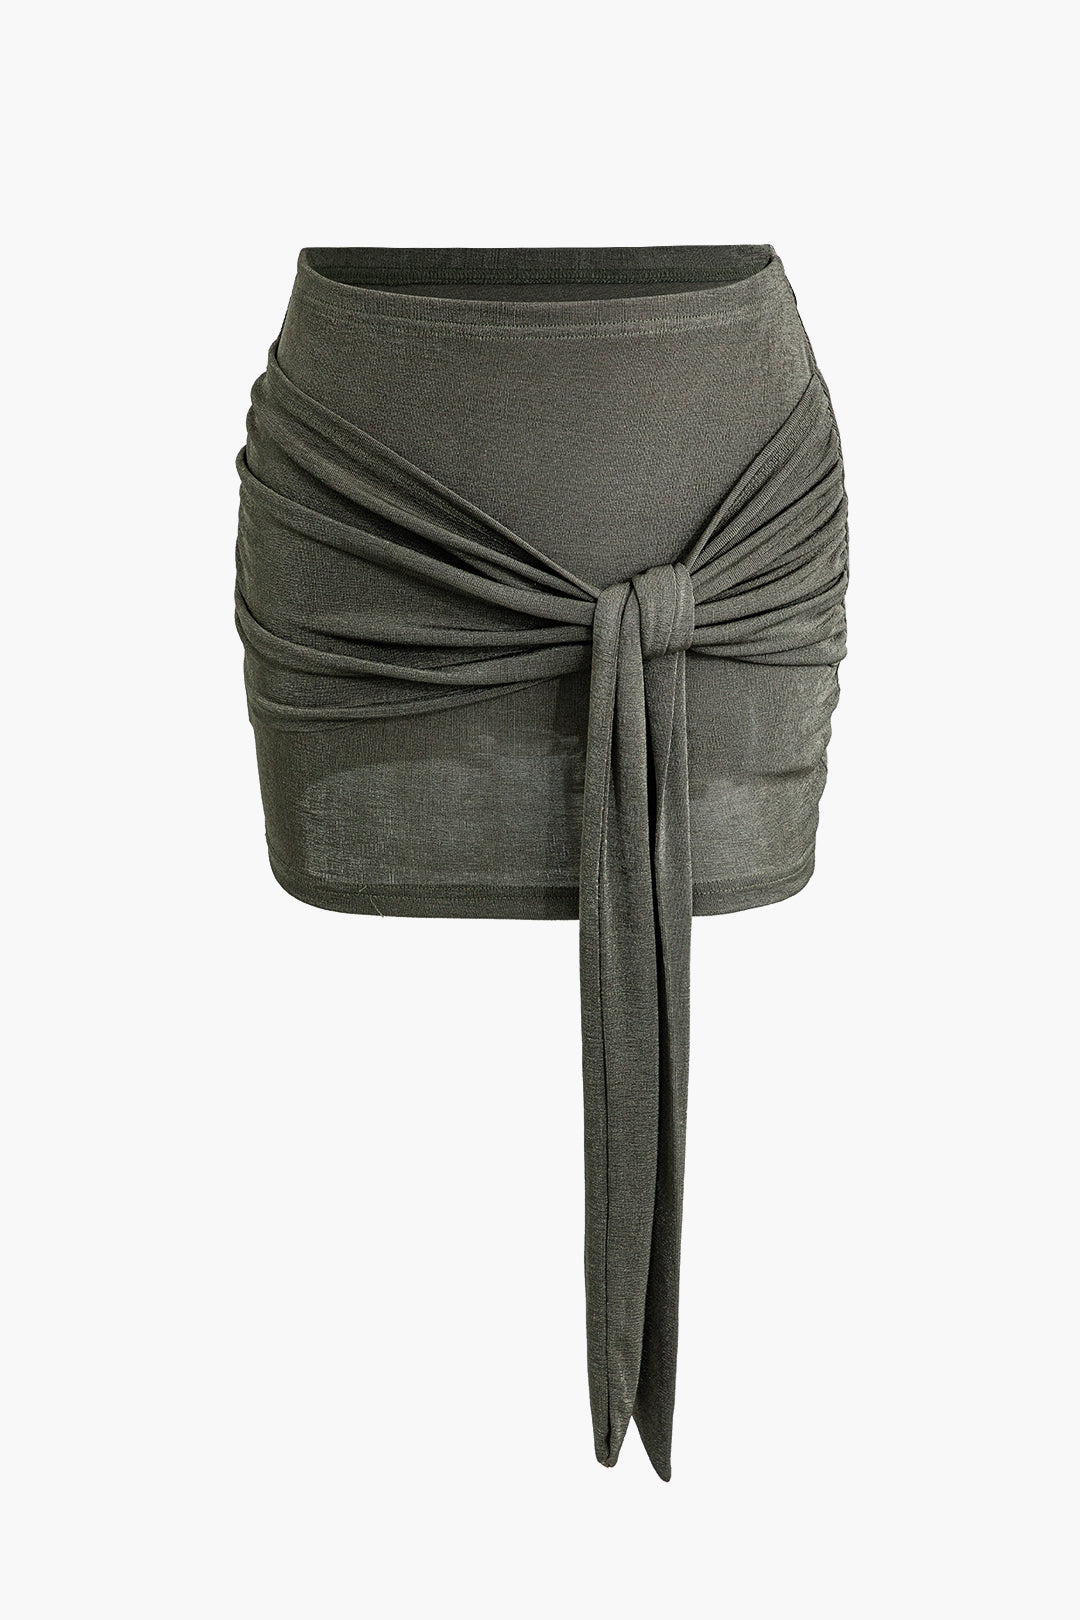 Cross Sleeveless Mock Neck Tank Top And Wrap Knot Mini Skirt Set